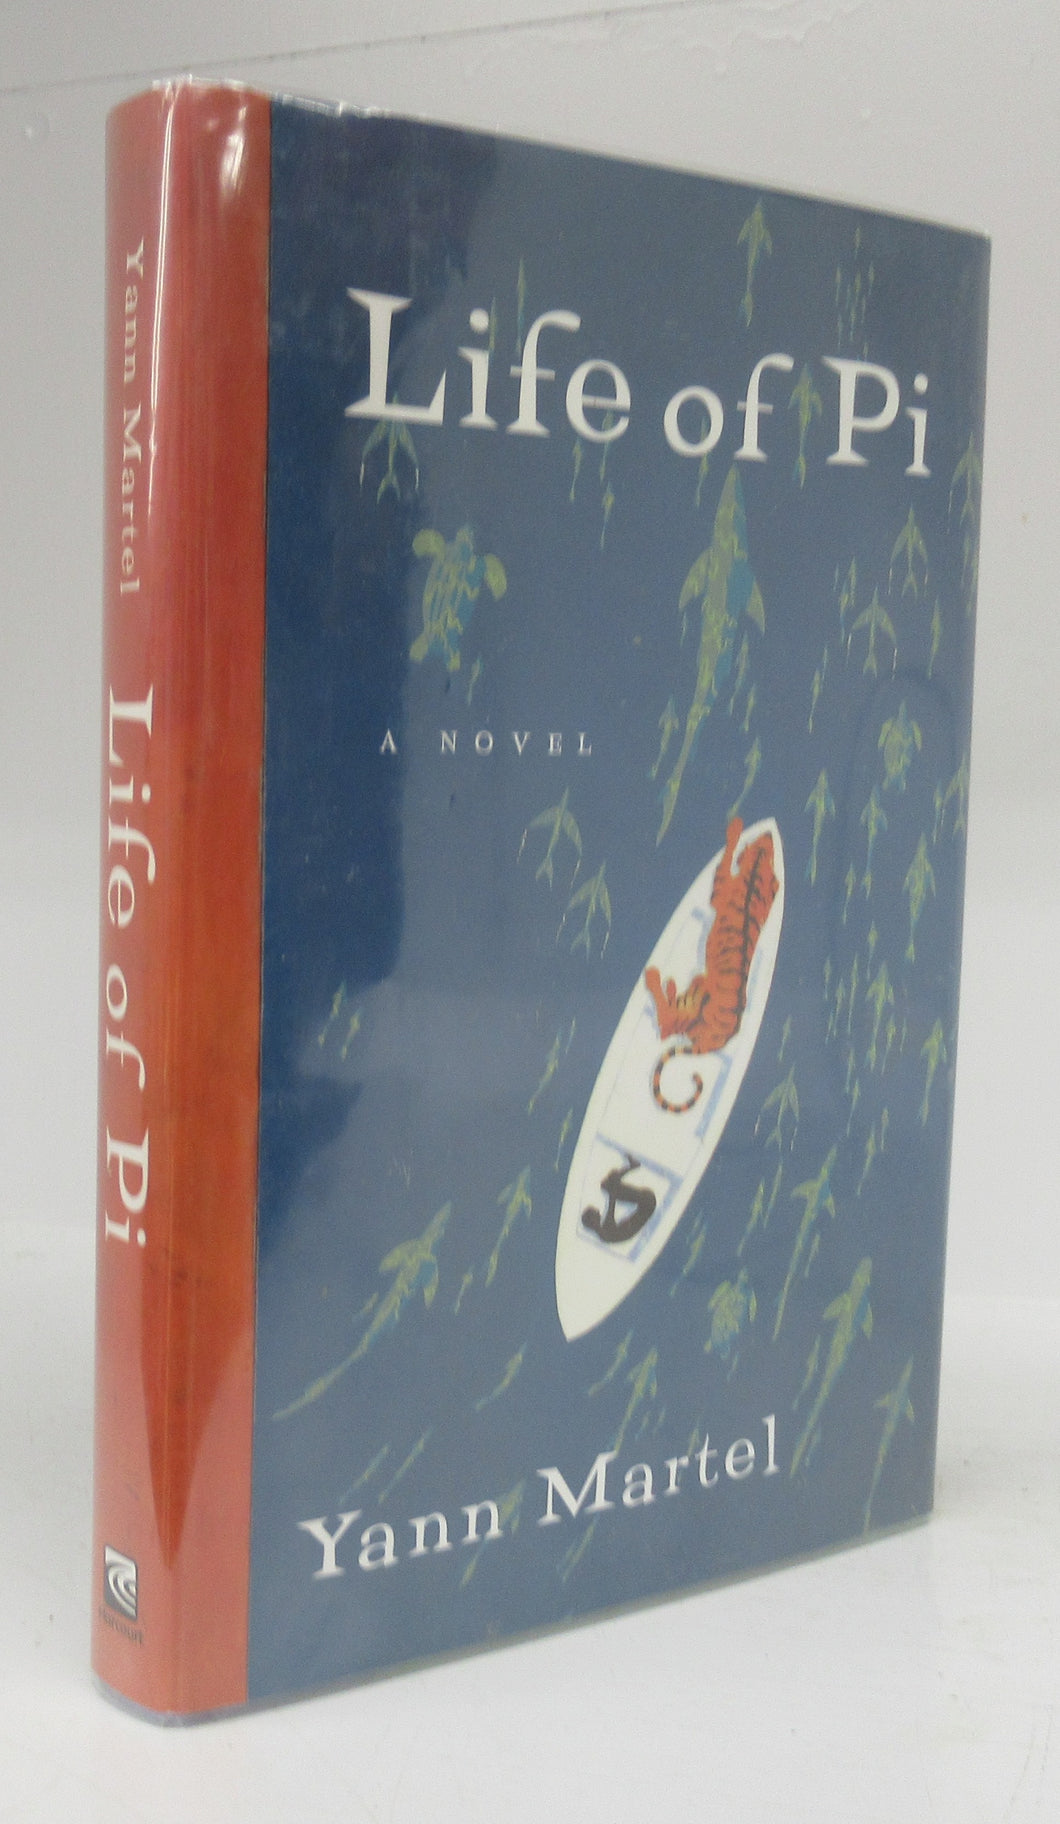 Pi:　Novel　A　Books　–　Attic　Life　of